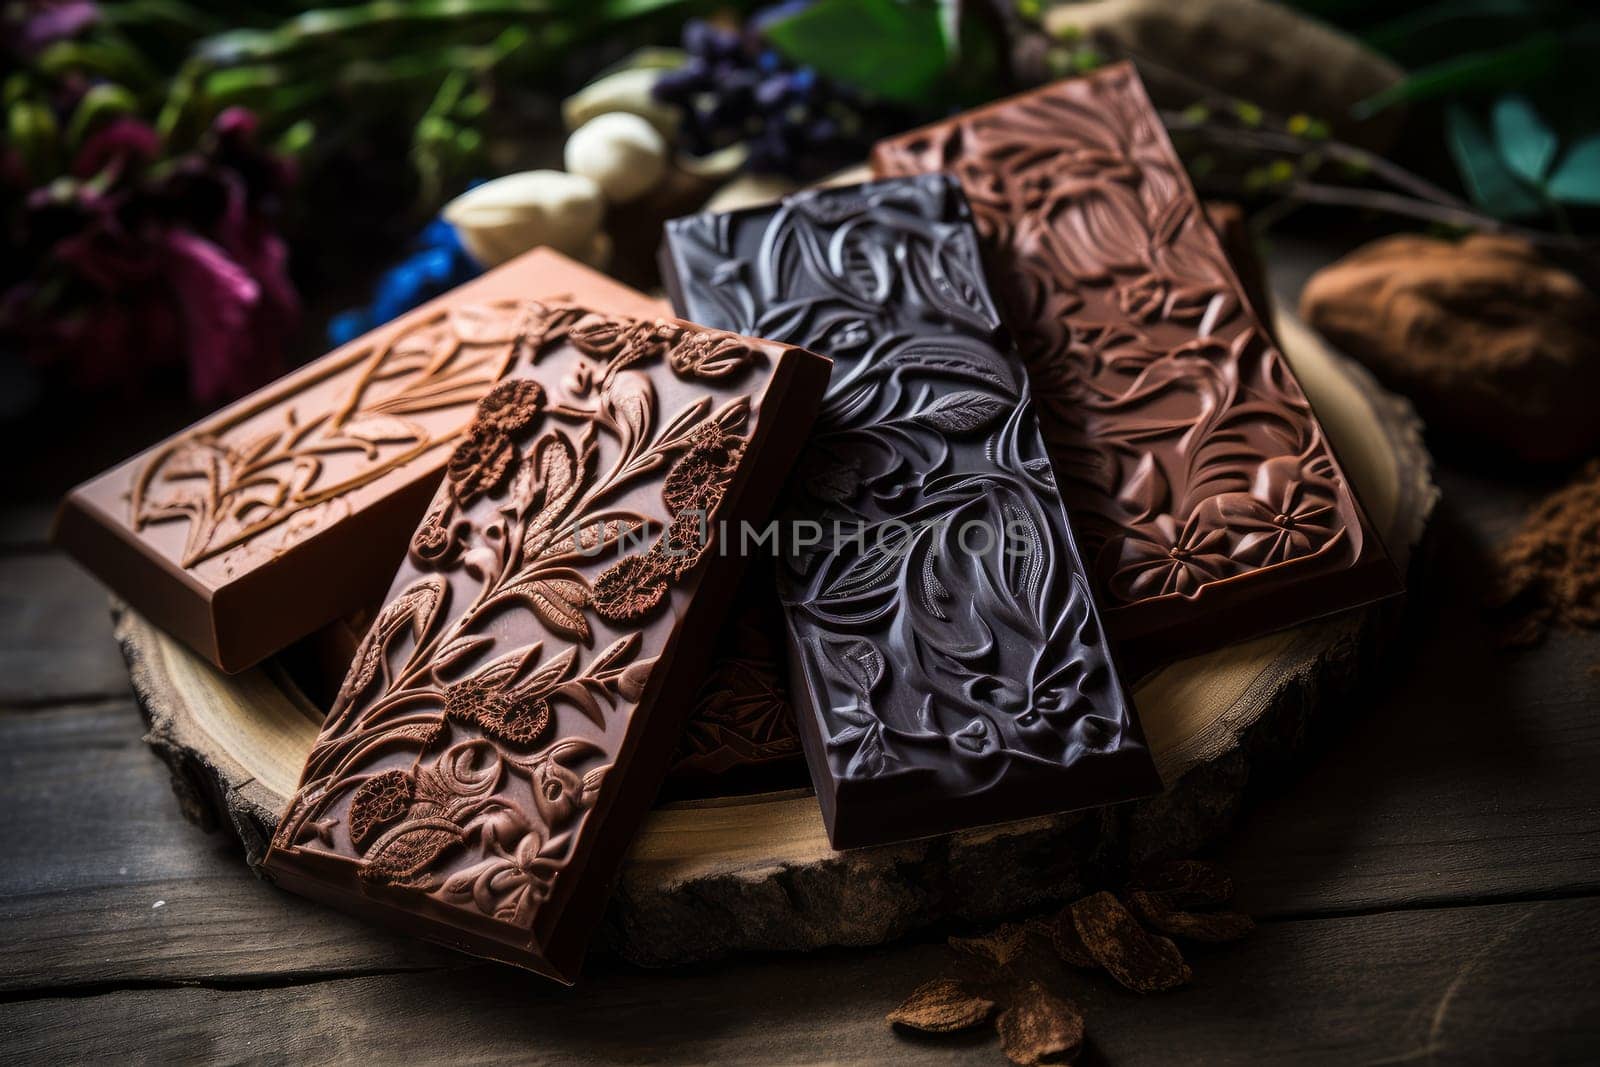 Nutritious Handmade vegan chocolate. Generate Ai by ylivdesign